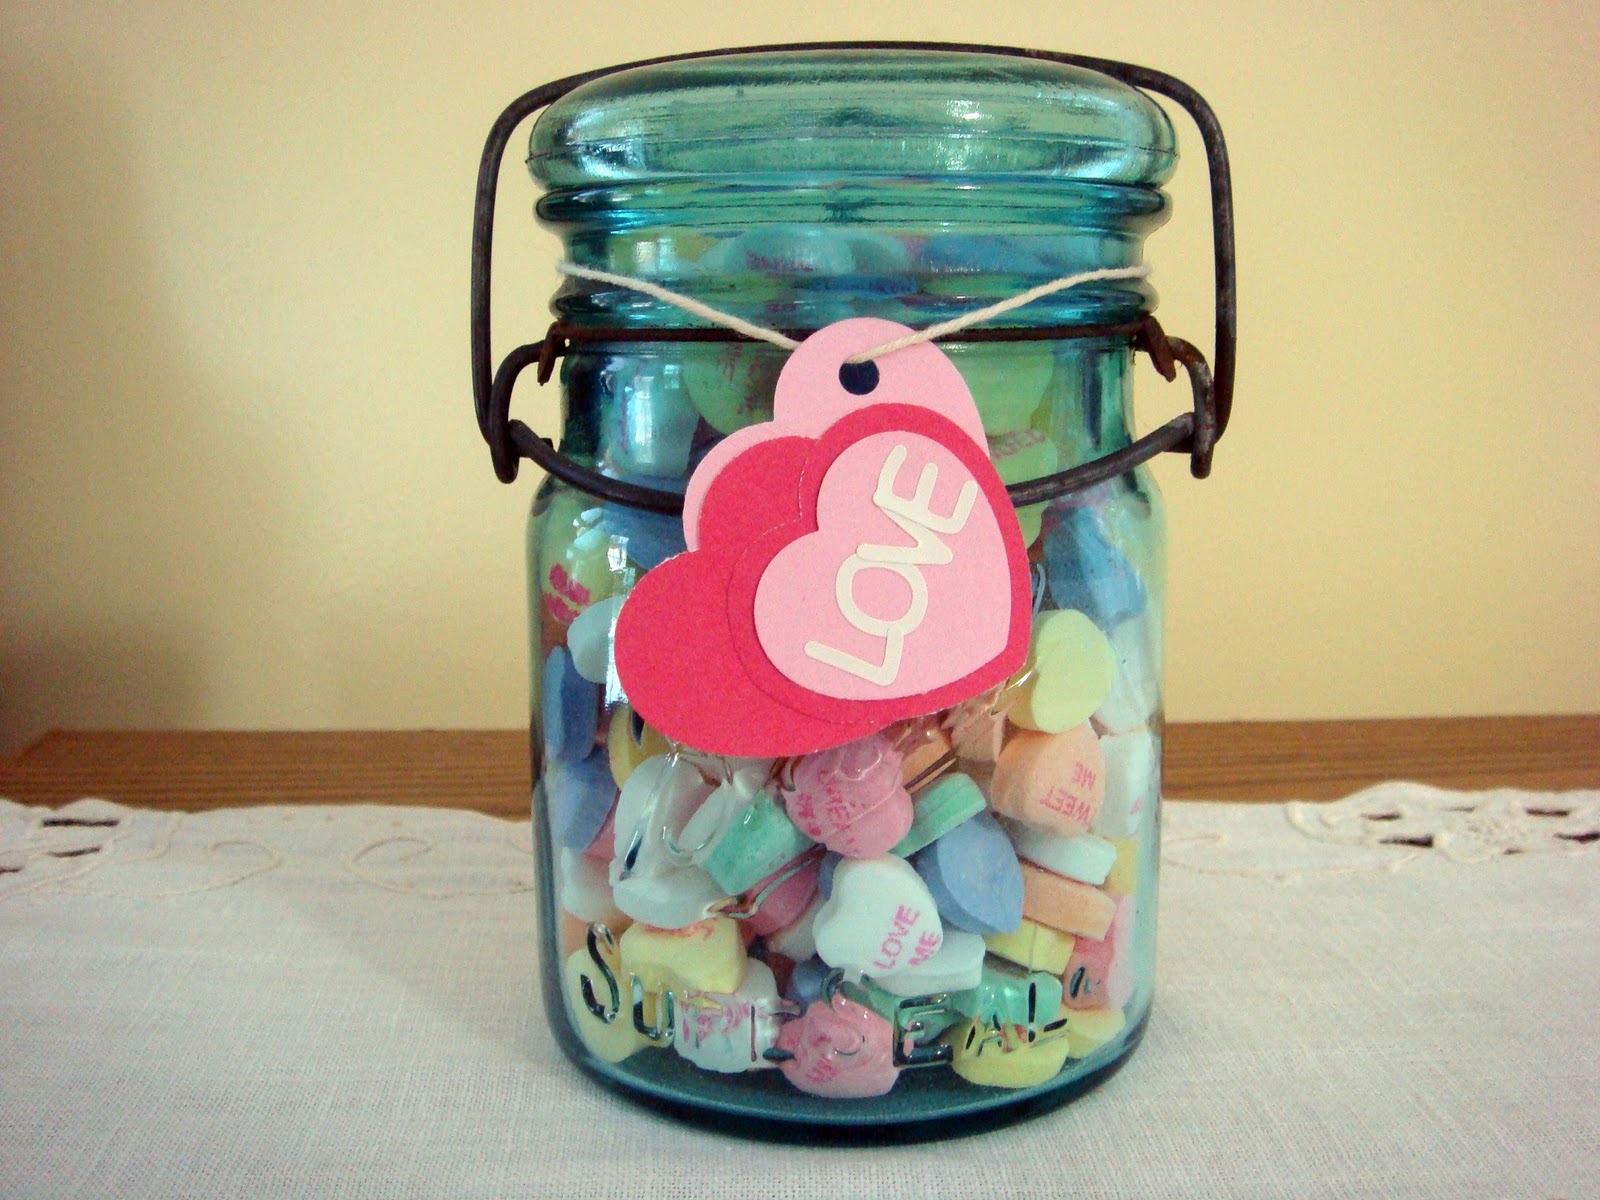 http://4.bp.blogspot.com/-Lc4cjF64I20/TcuV70v2kEI/AAAAAAAAAOw/8zeu5IEsgJU/s1600/Candy+Hearts+Jar.jpg